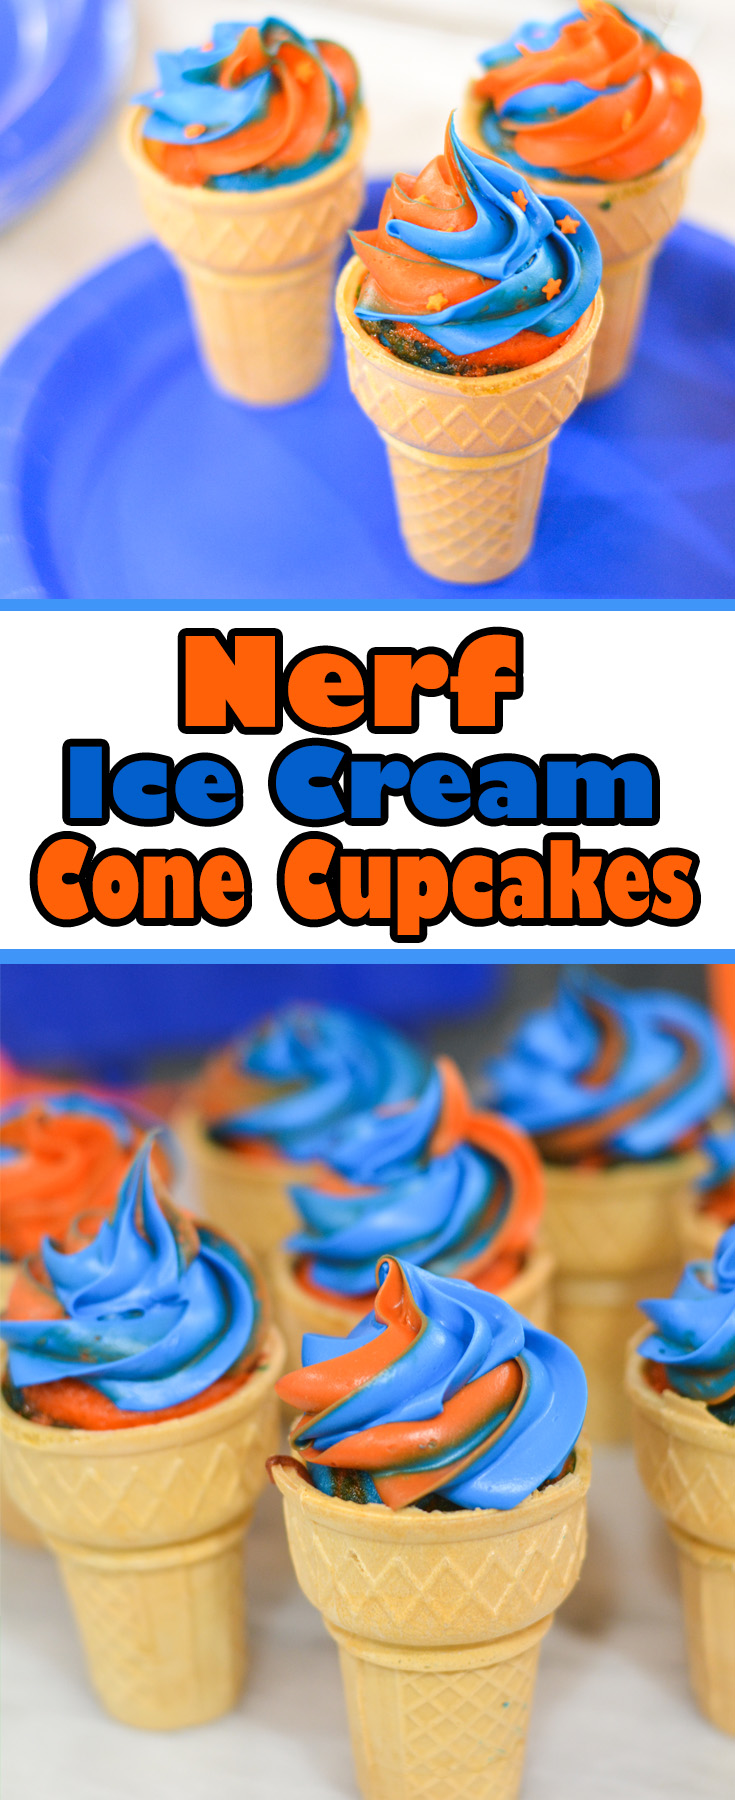 Nerf Cupcakes